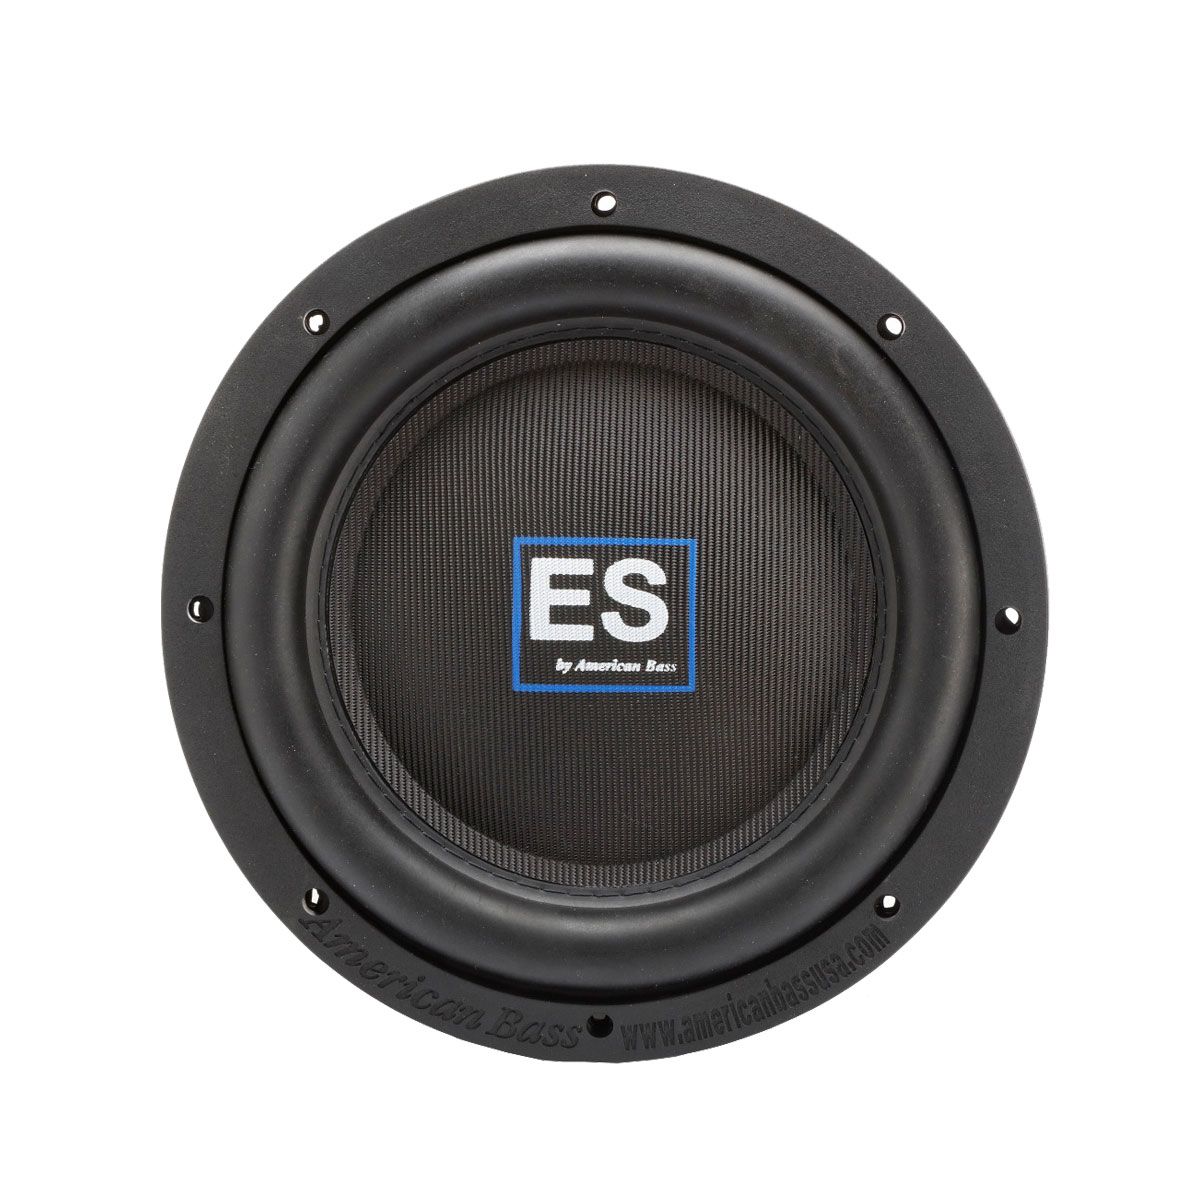 ES 10" Subwoofer - American Bass Audio